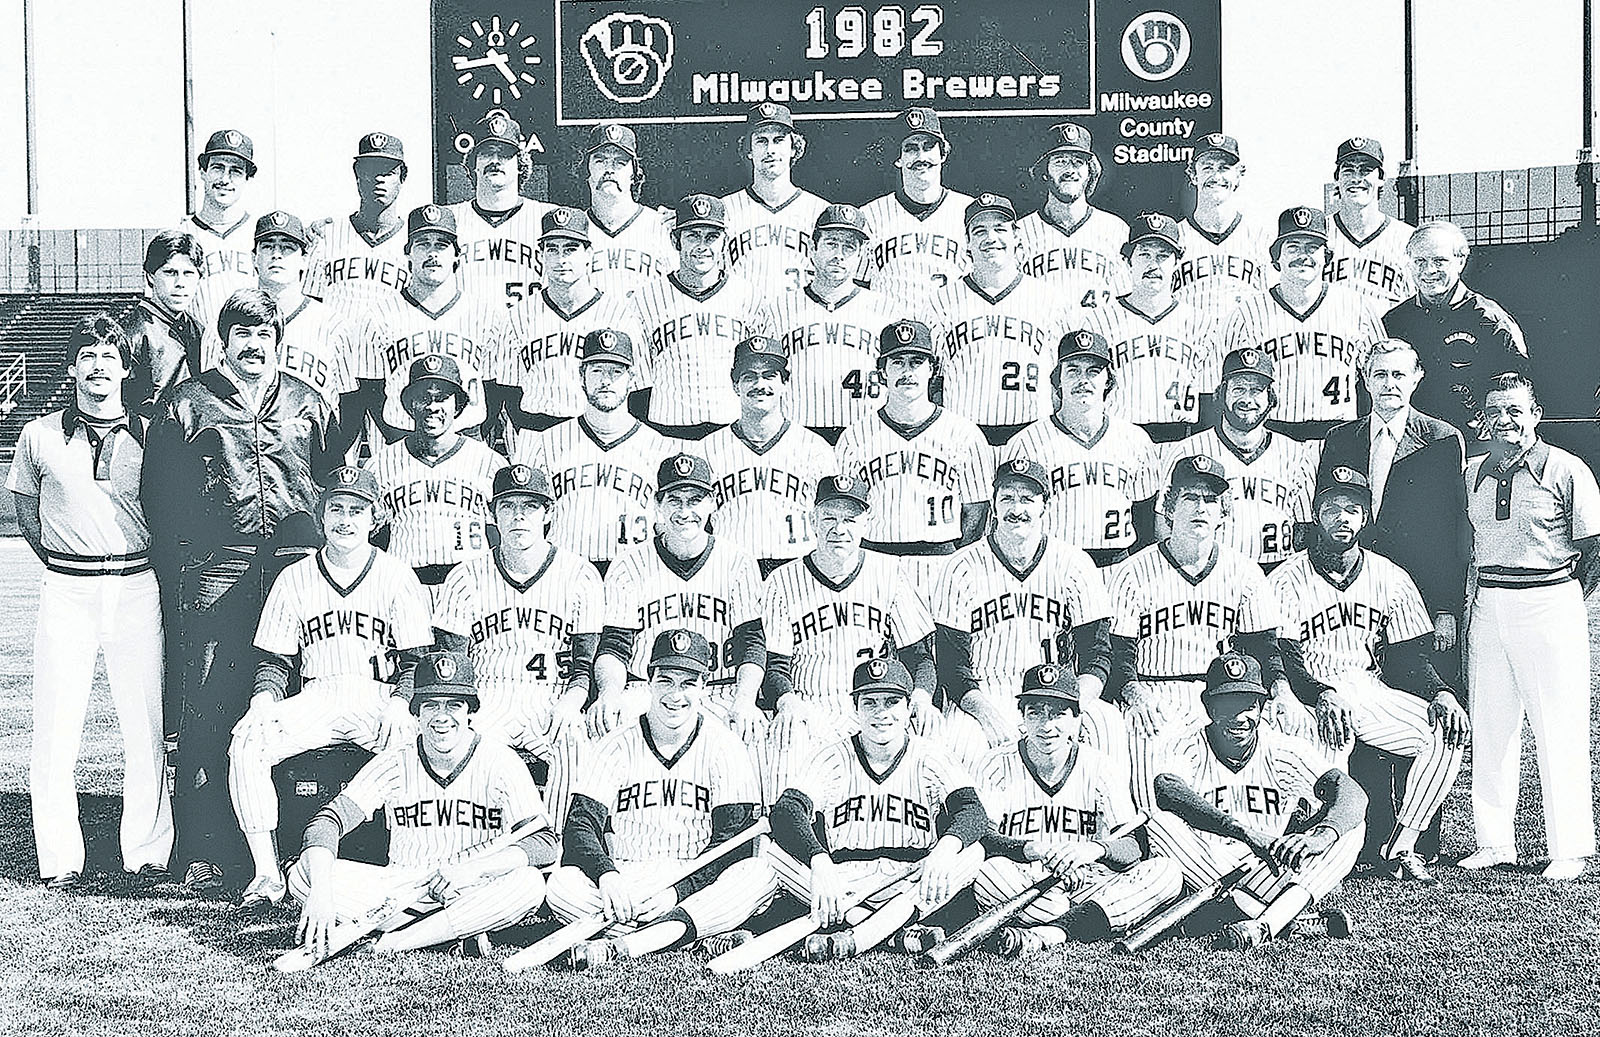 Milwaukee Brewers will bring back 1982 team, Fielder, Braun and